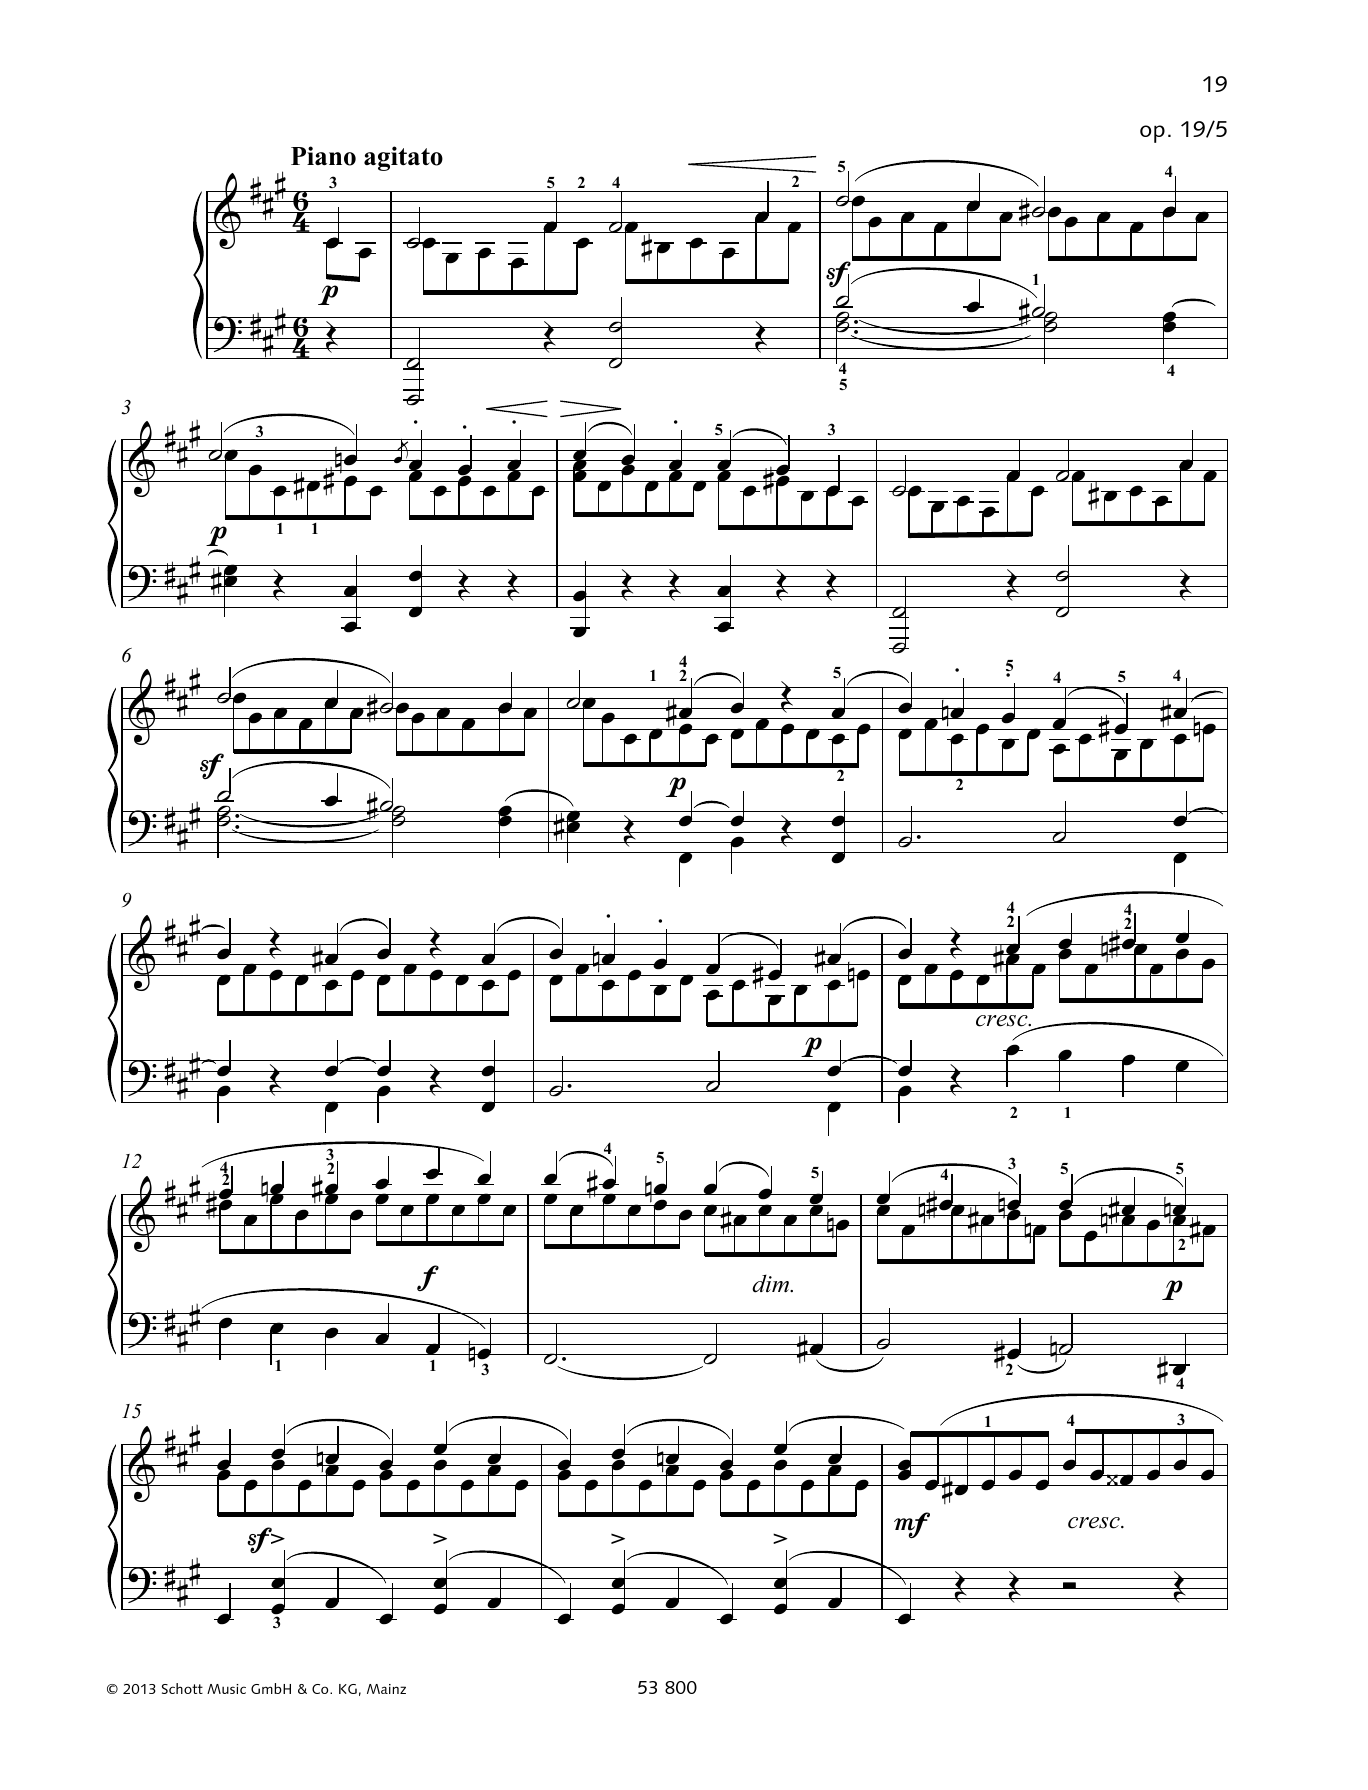 Download Felix Mendelssohn Bartholdy Piano agitato Sheet Music